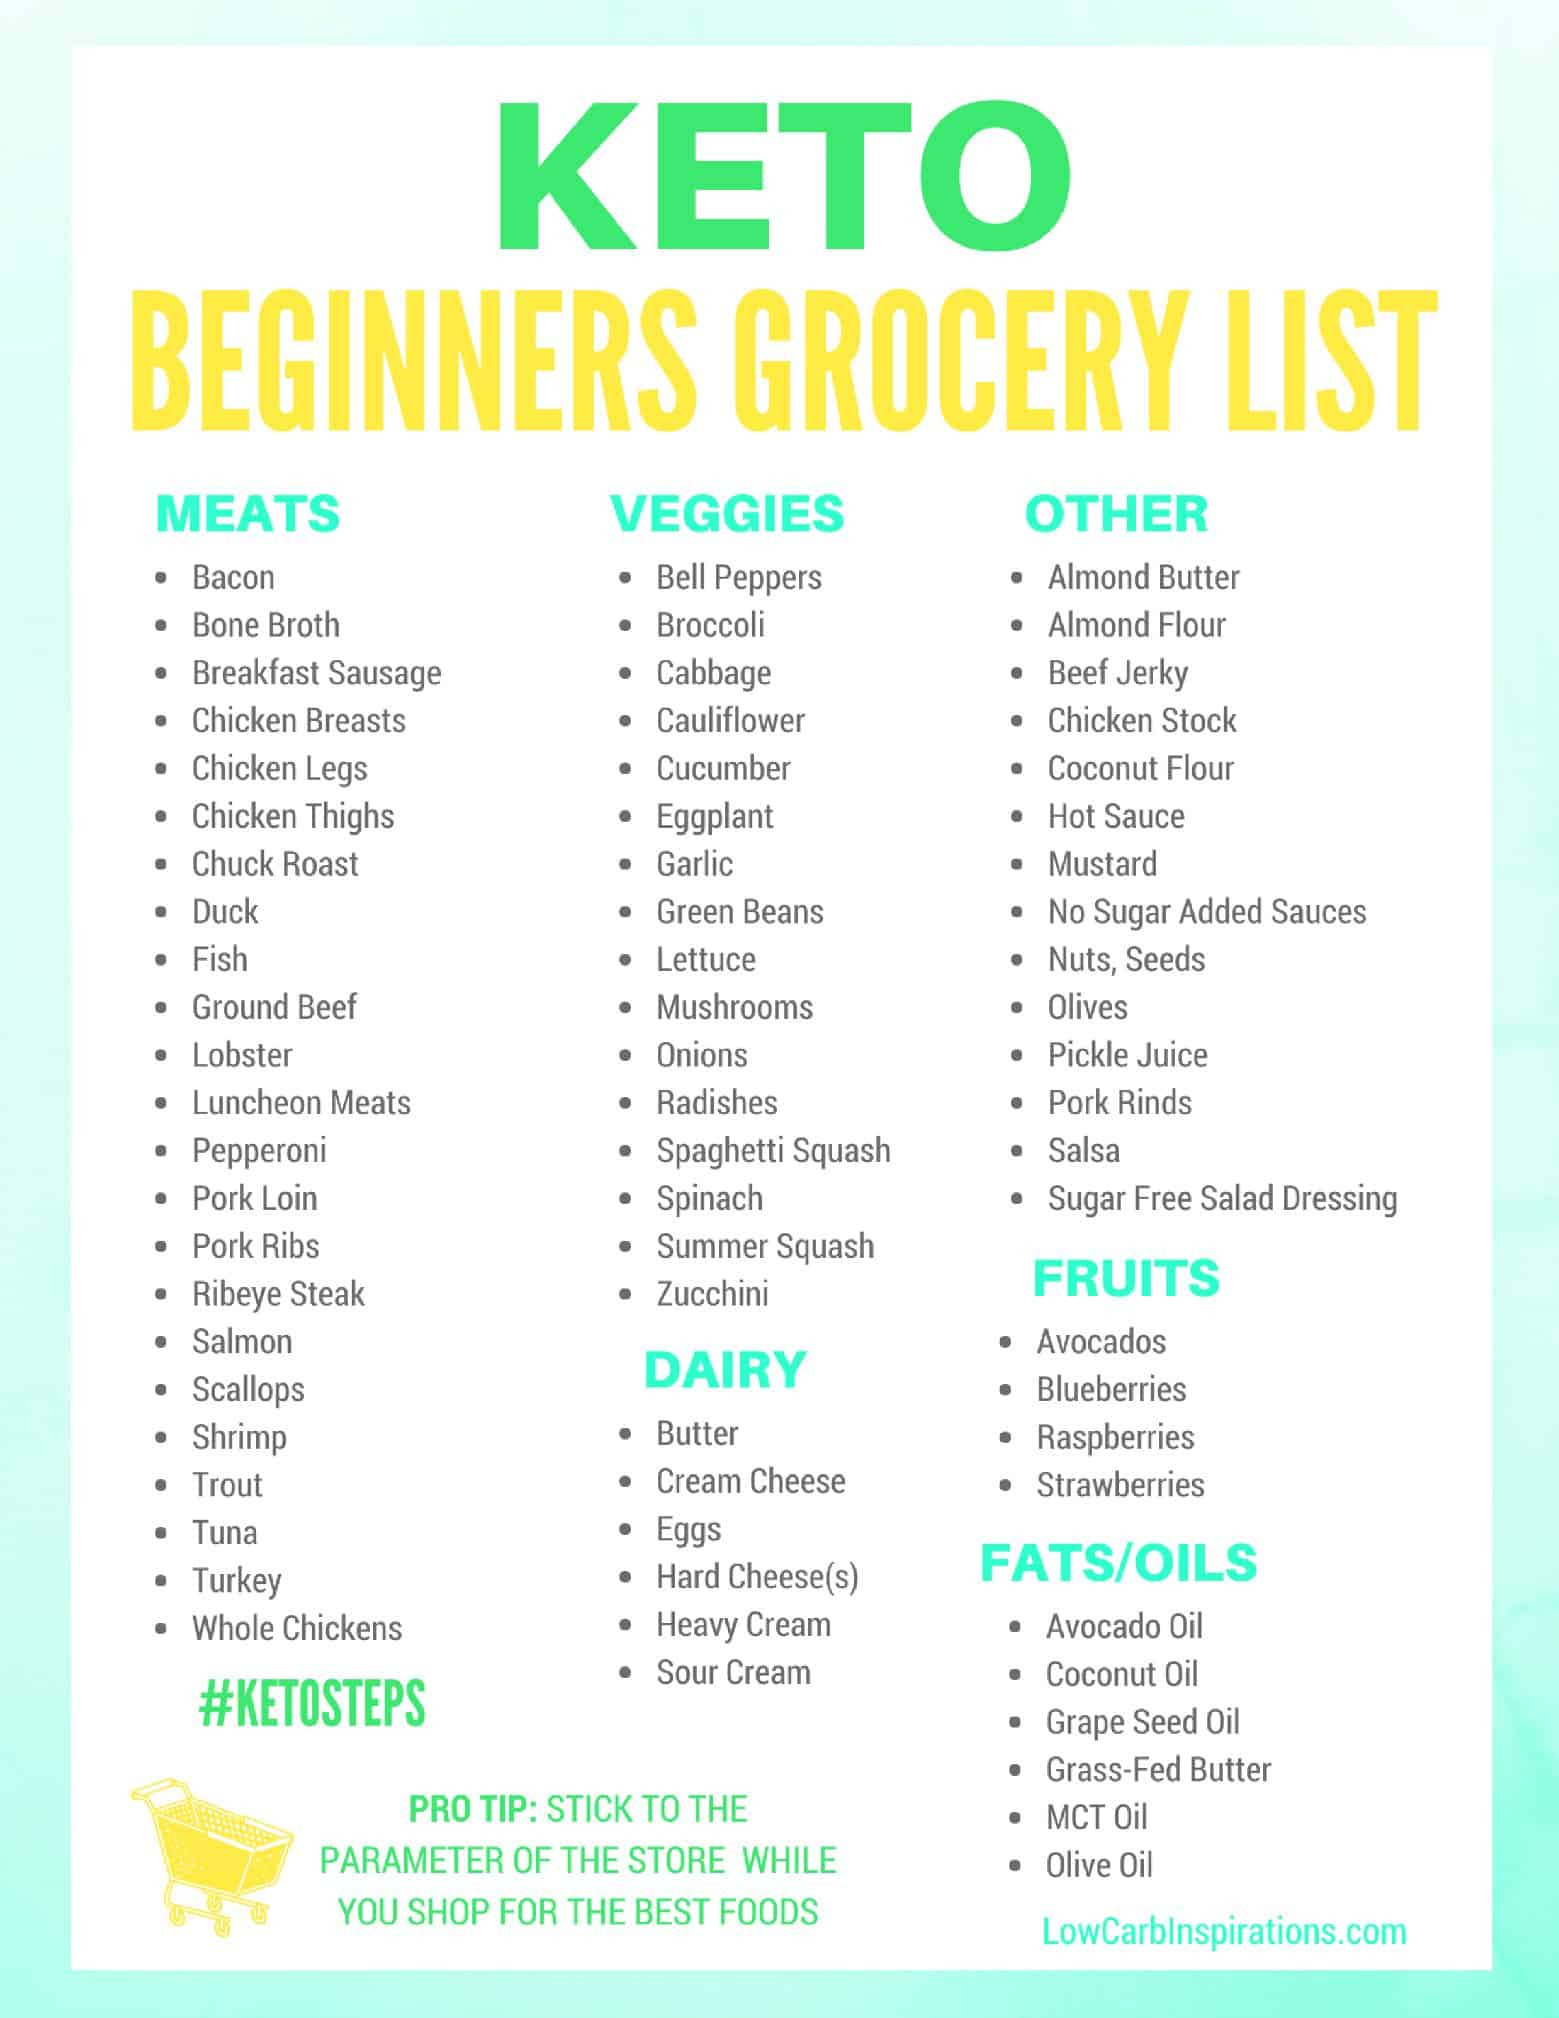 Keto For Beginners Grocery List
 Keto Grocery List for Beginners iSaveA2Z